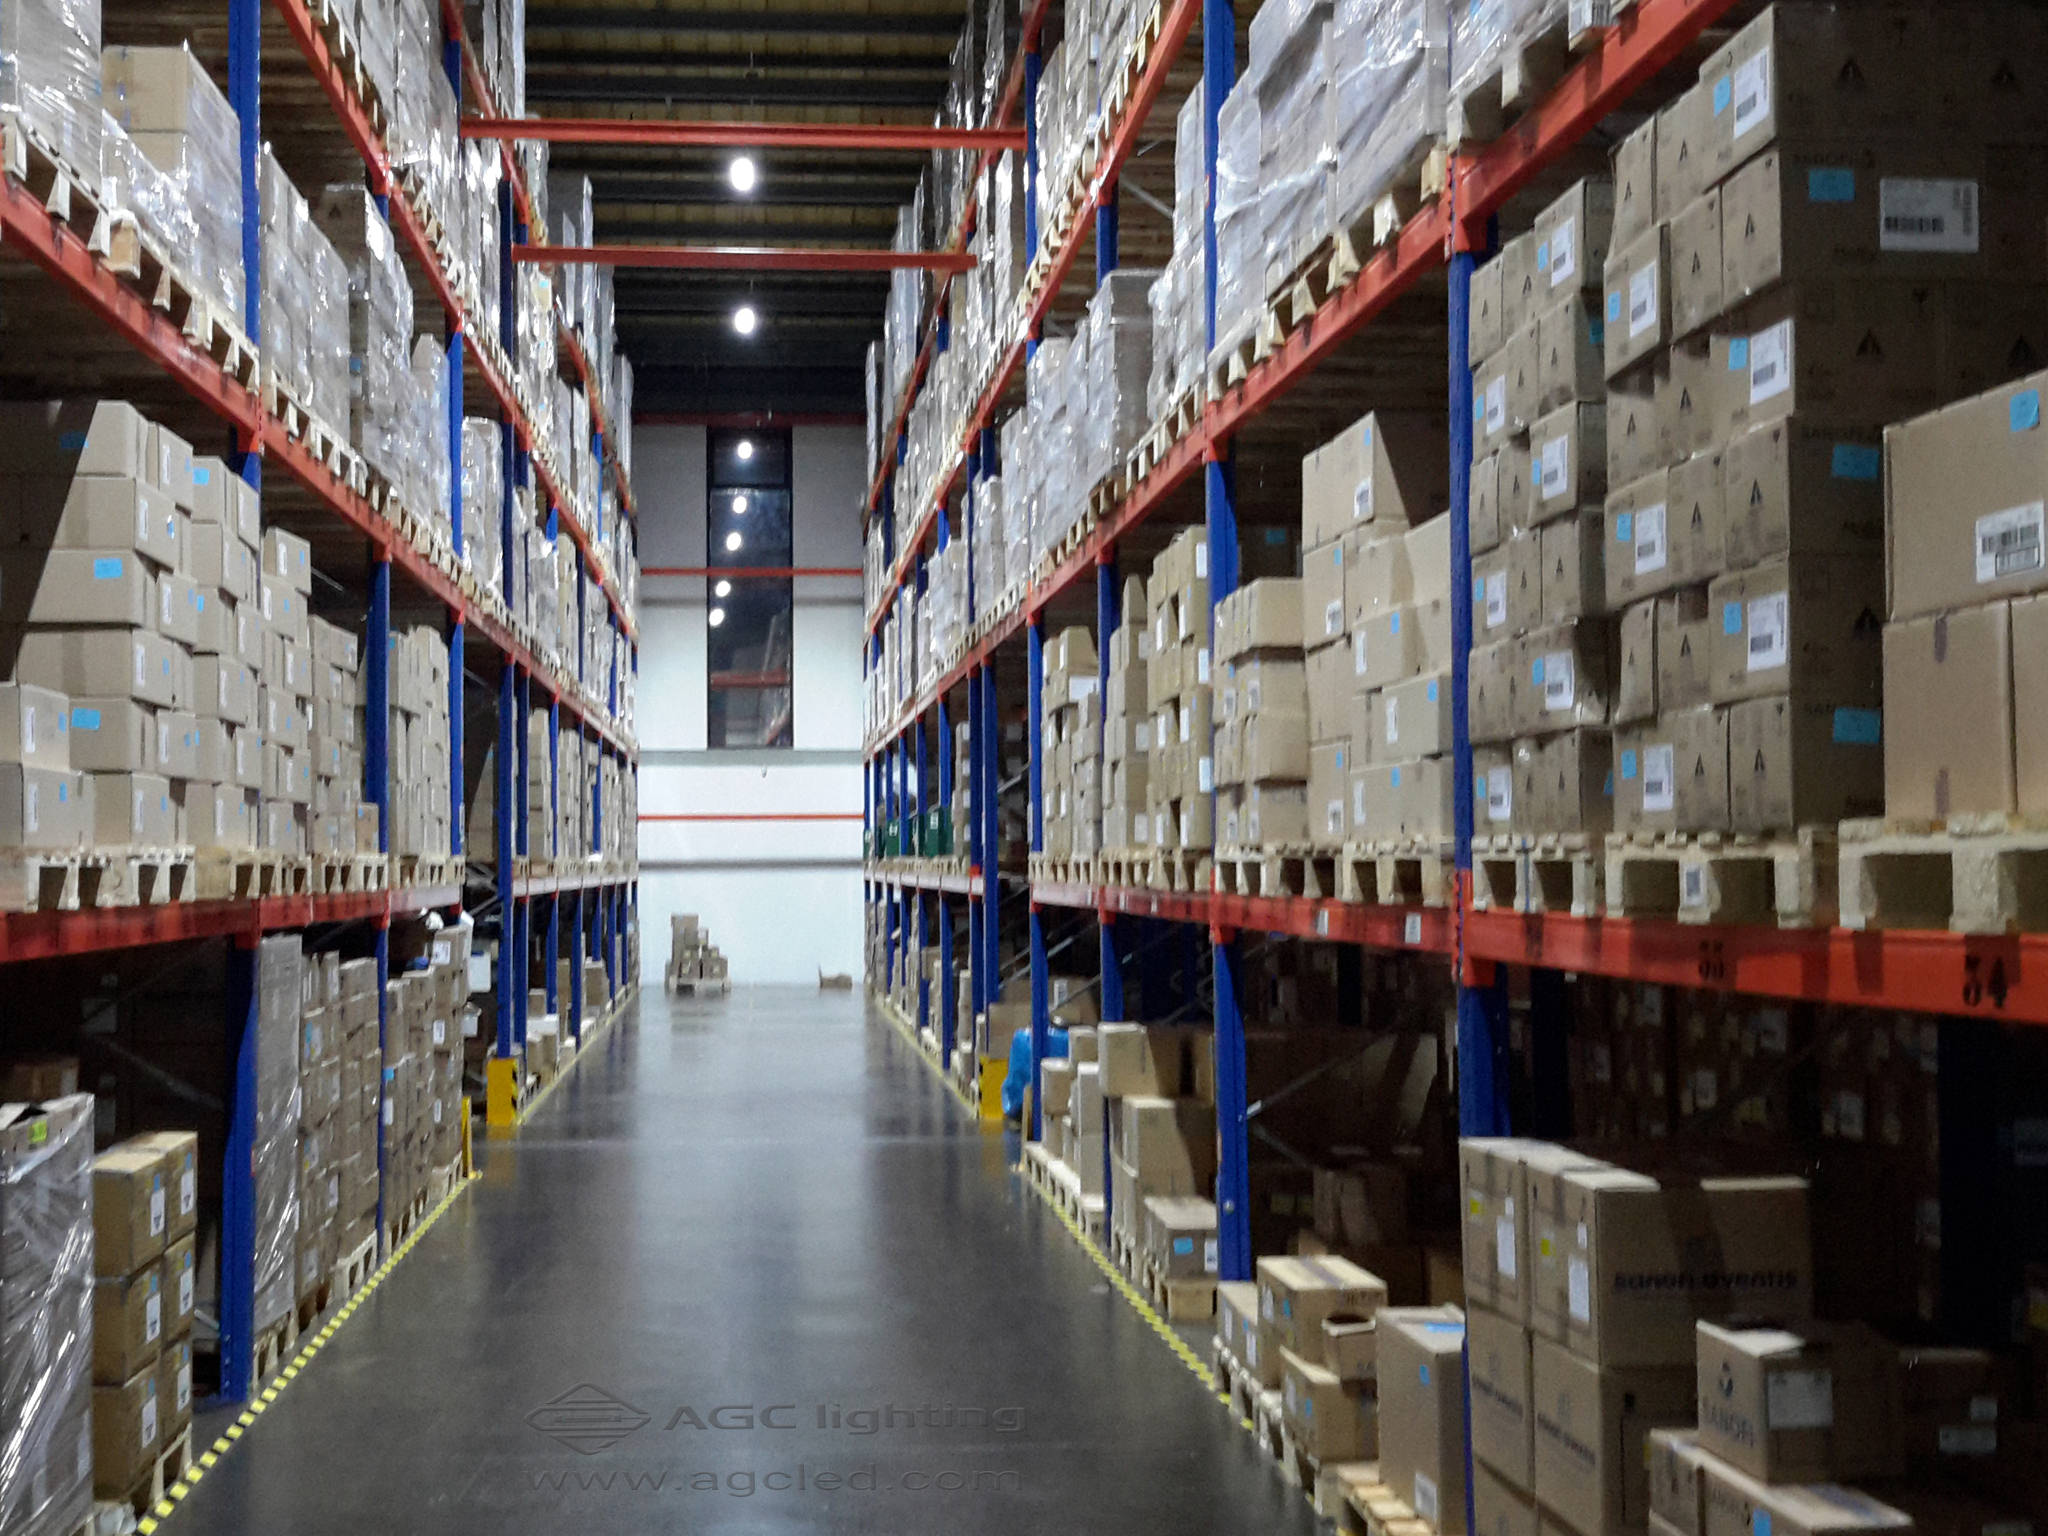 long and narrow light distribution for warehouse aisles